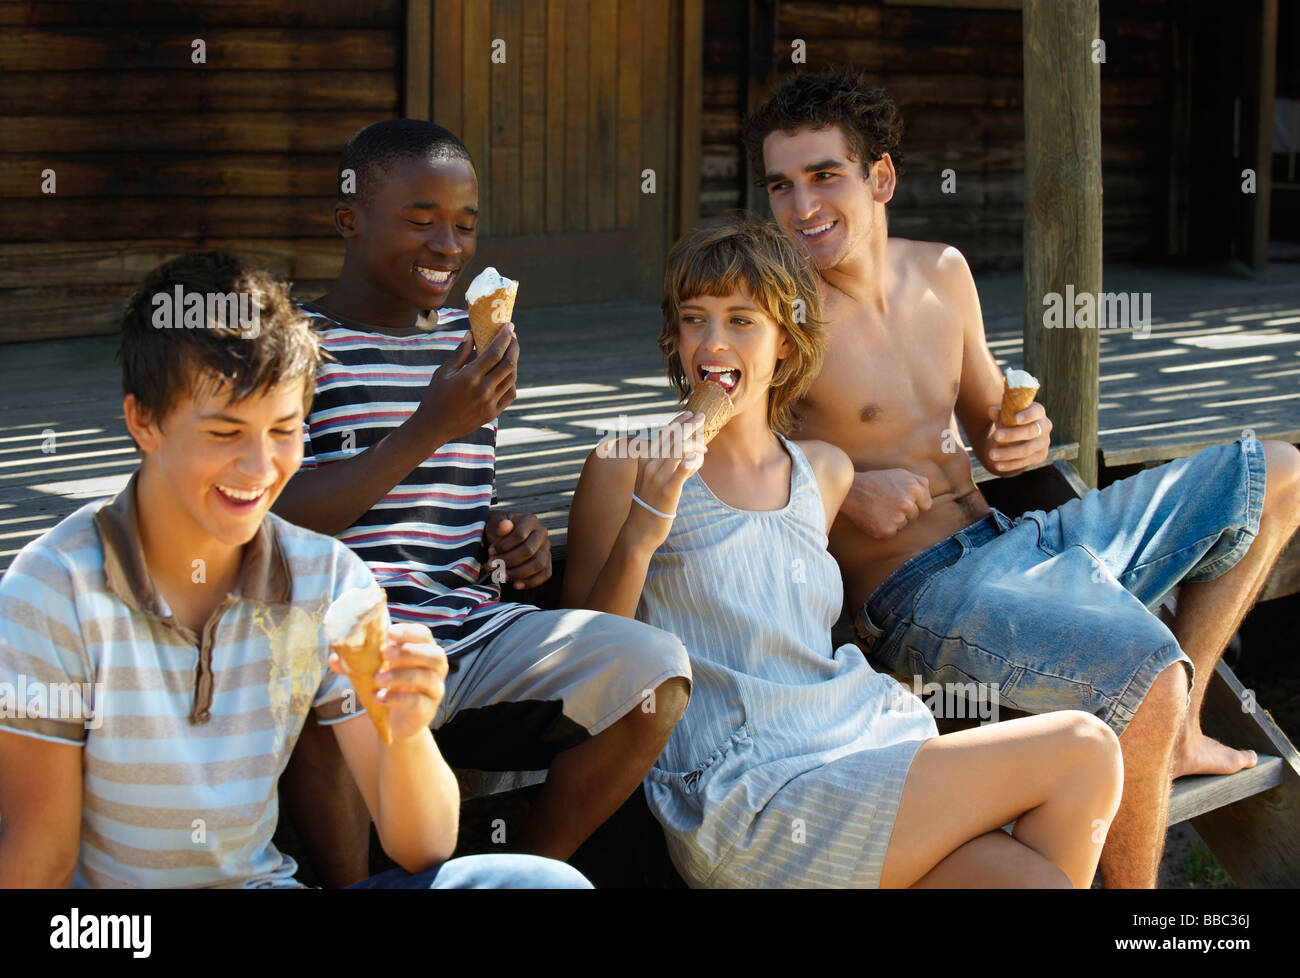 Teenagers eating ice cream on veranda Stock Photo